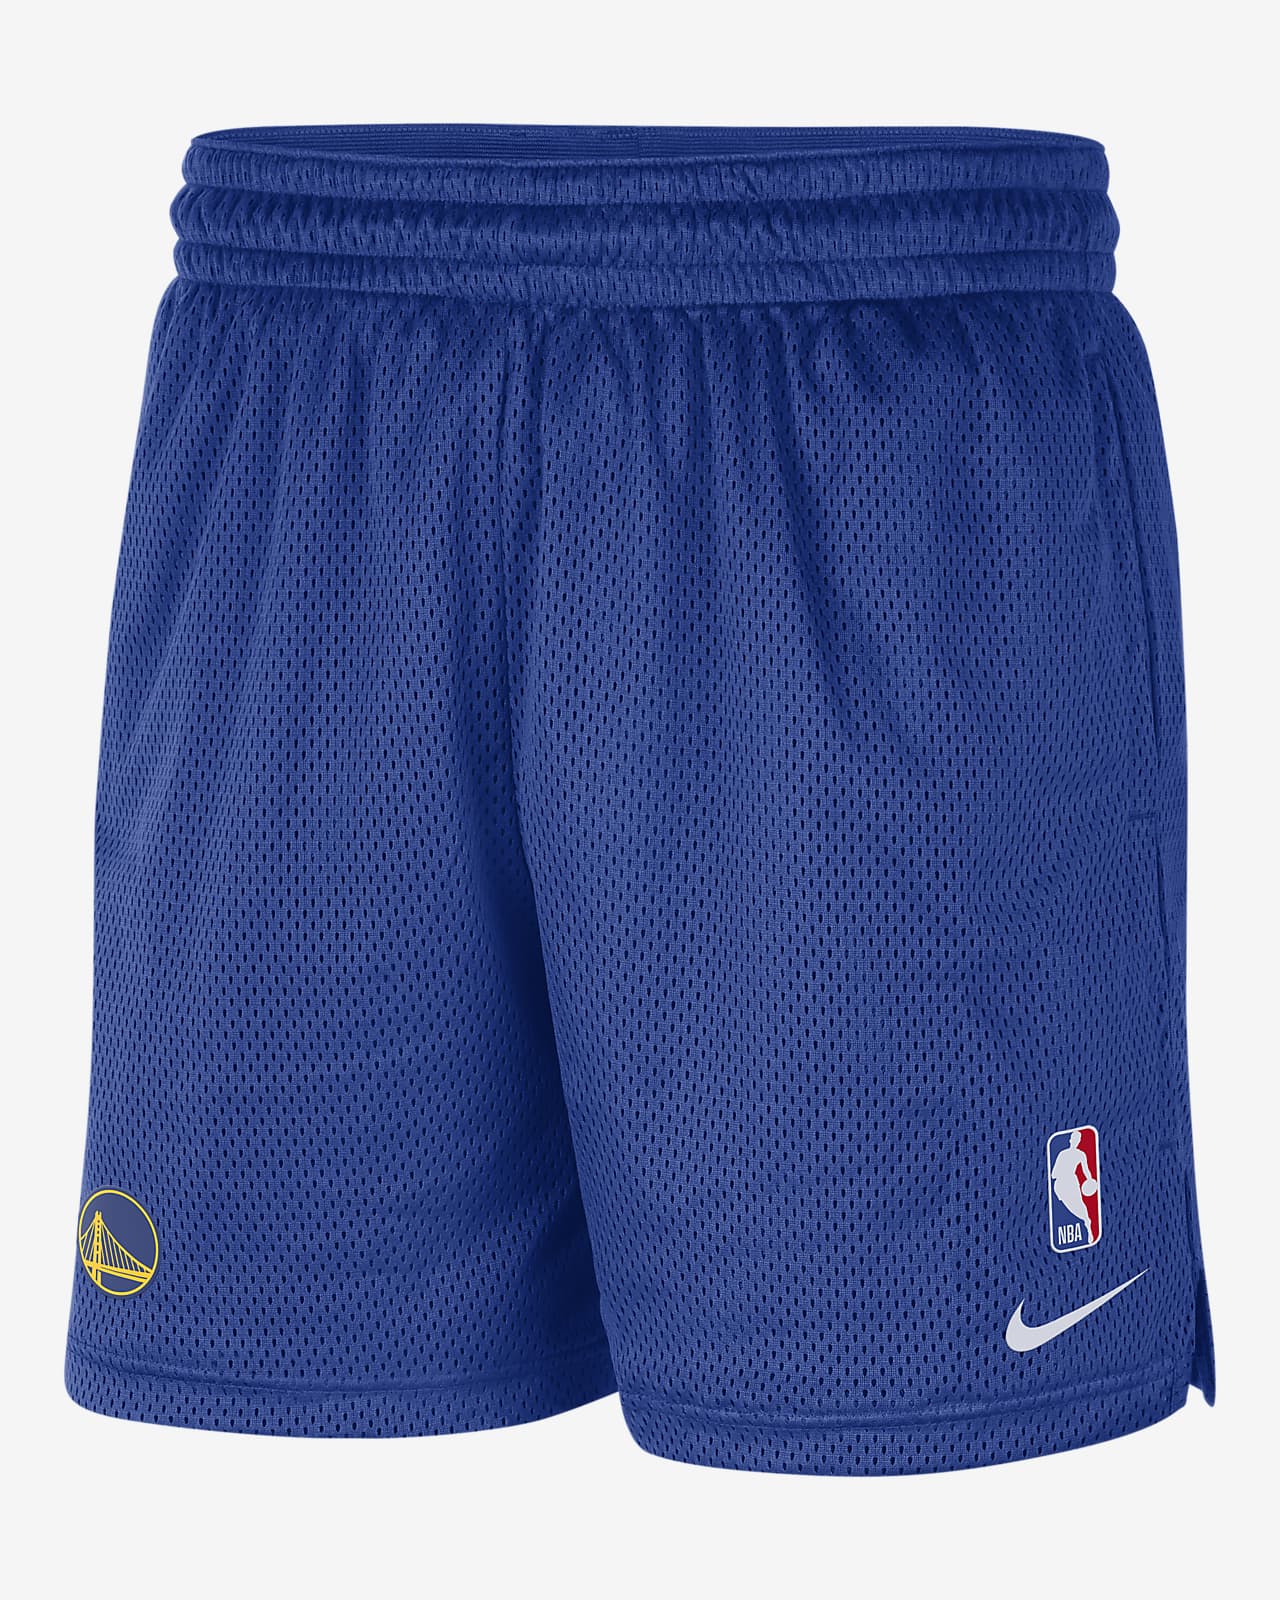 Golden State Warriors Men's Nike NBA Shorts